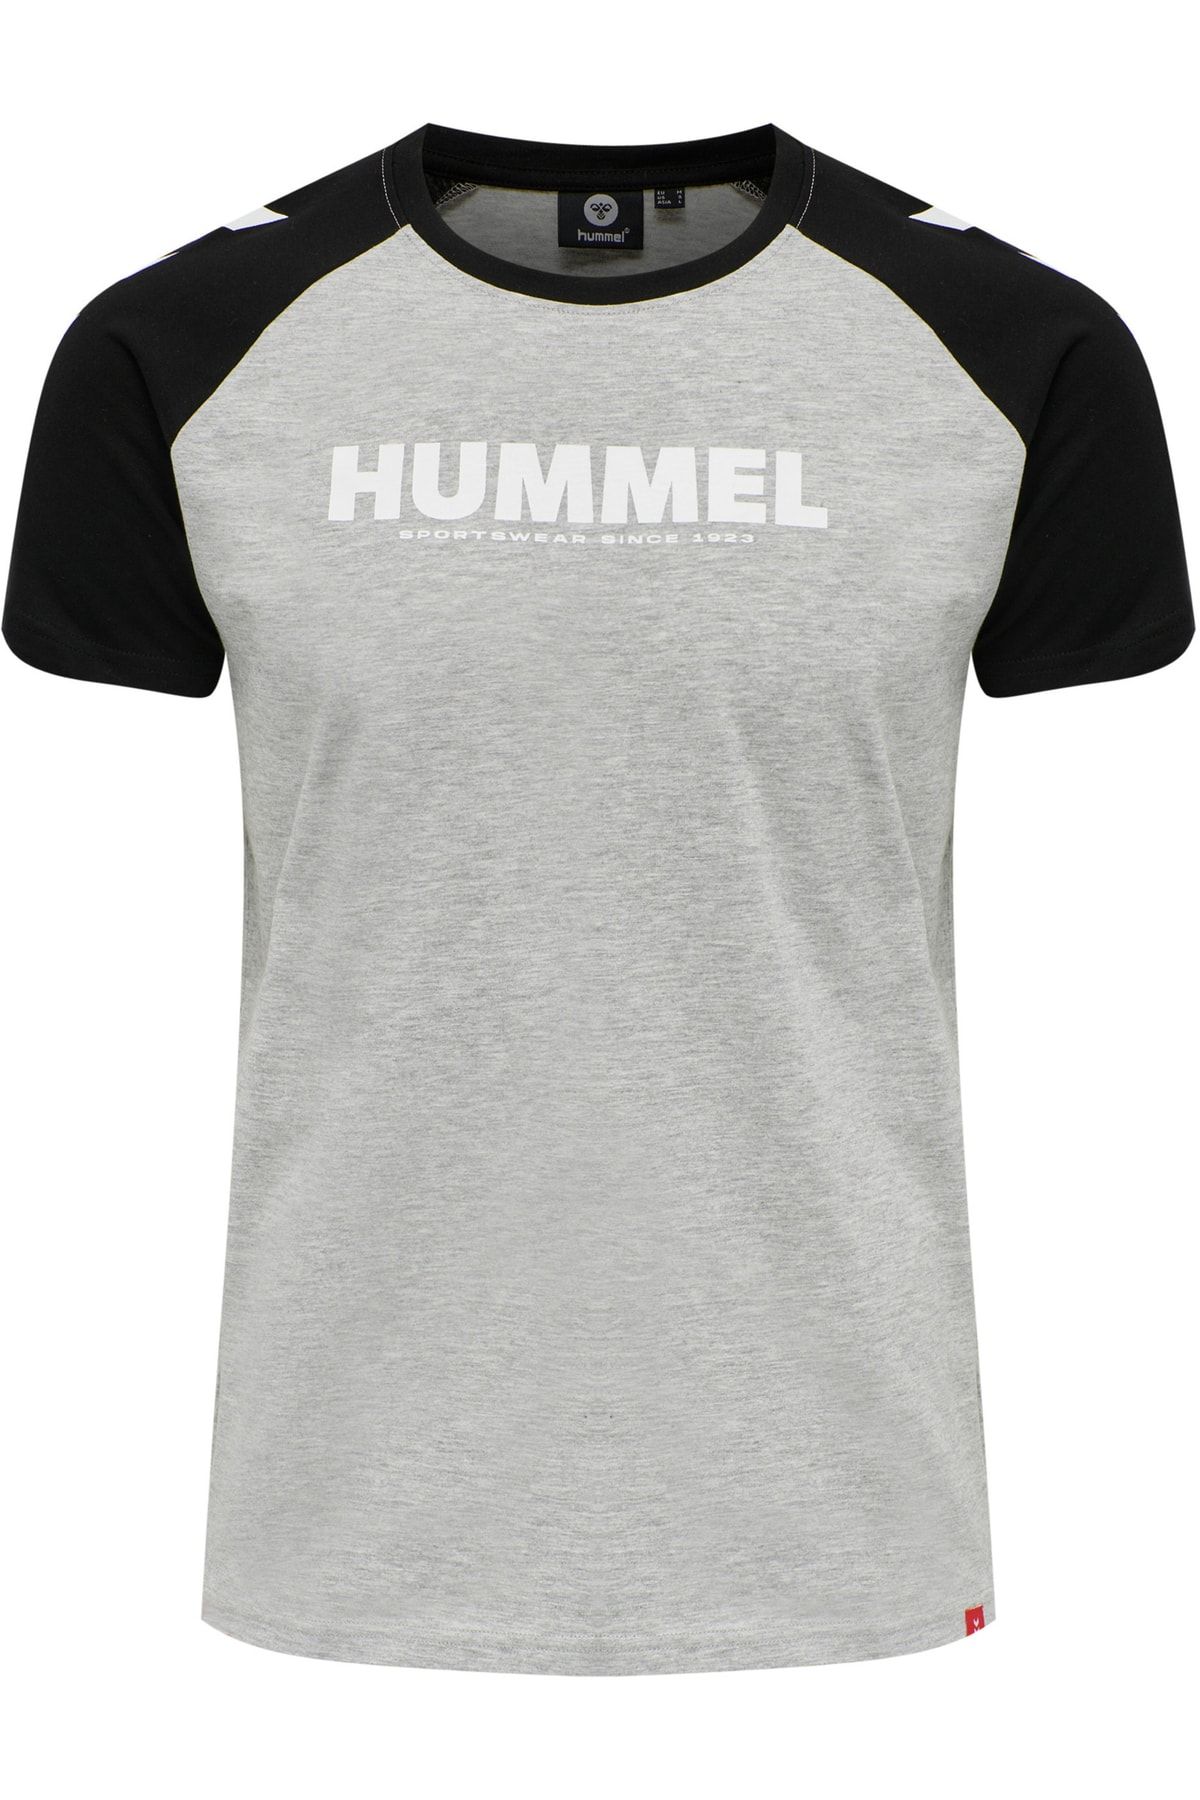 HUMMEL hmlLEGACY BLOCKED - Trendyol T-SHIRT